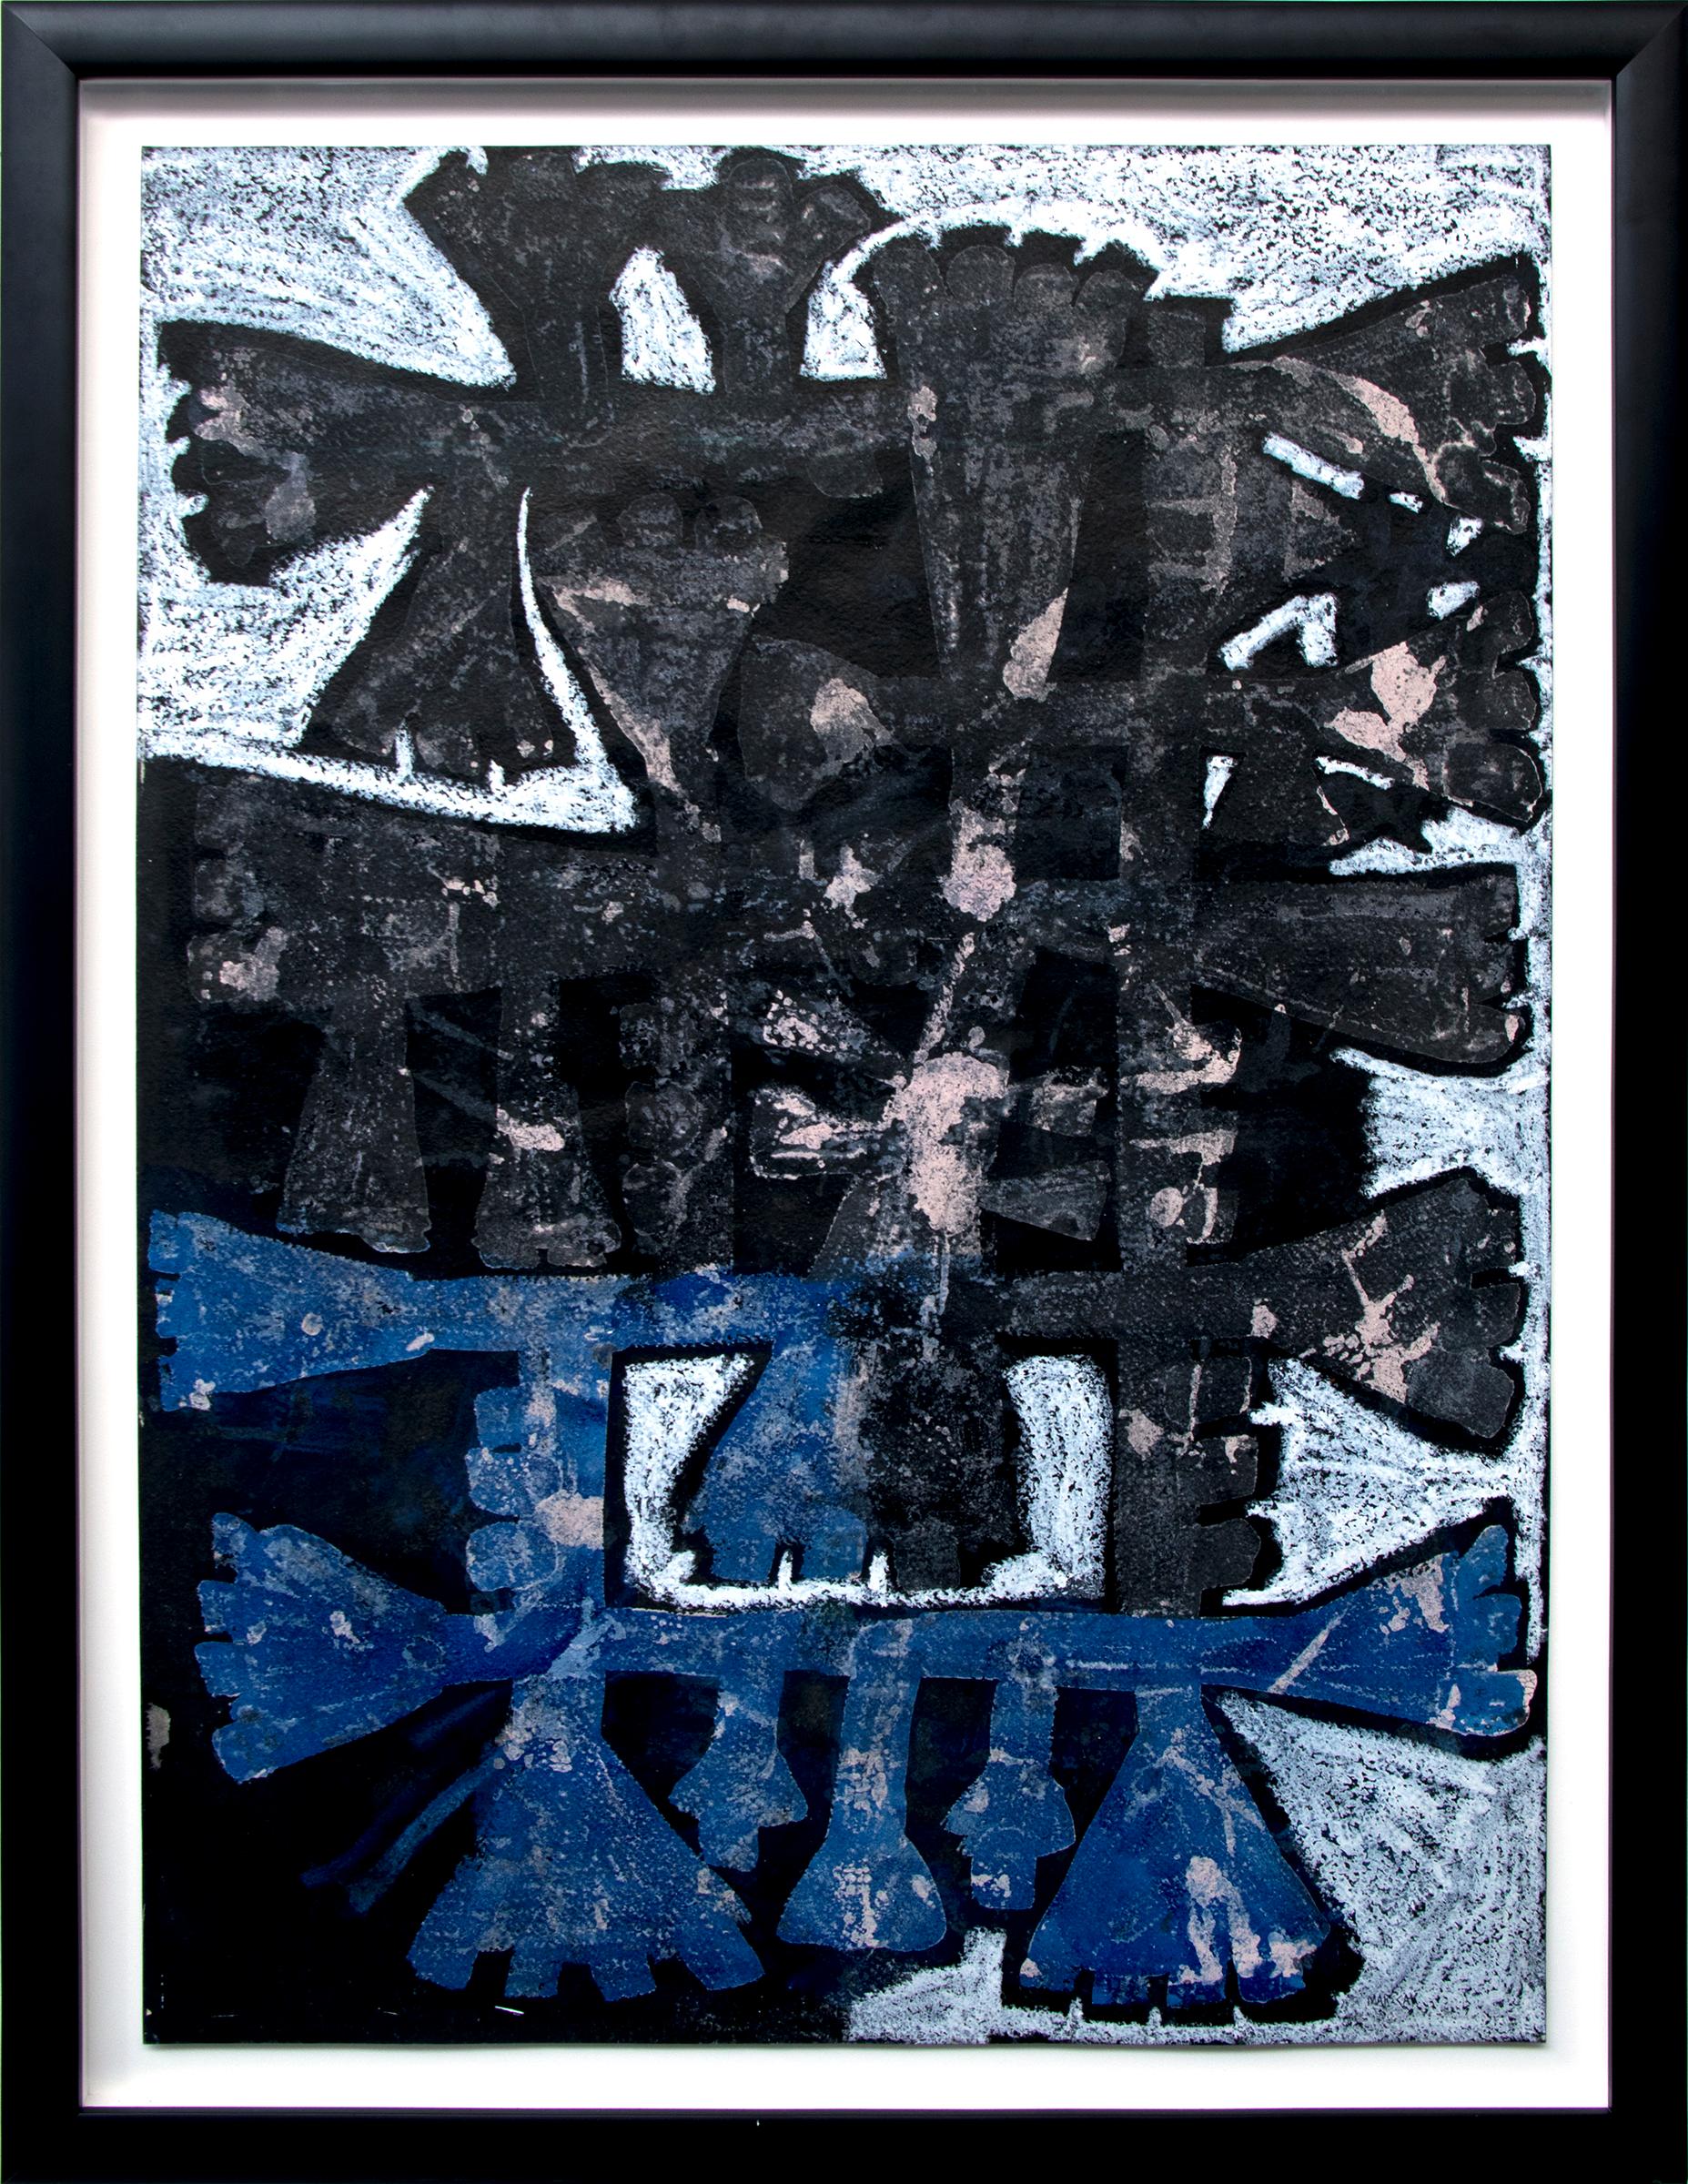 Untitled #21, 1970s Abstract Mixed Media Acrylic Painting, Blue Black Shapes - Mixed Media Art by Edward Marecak